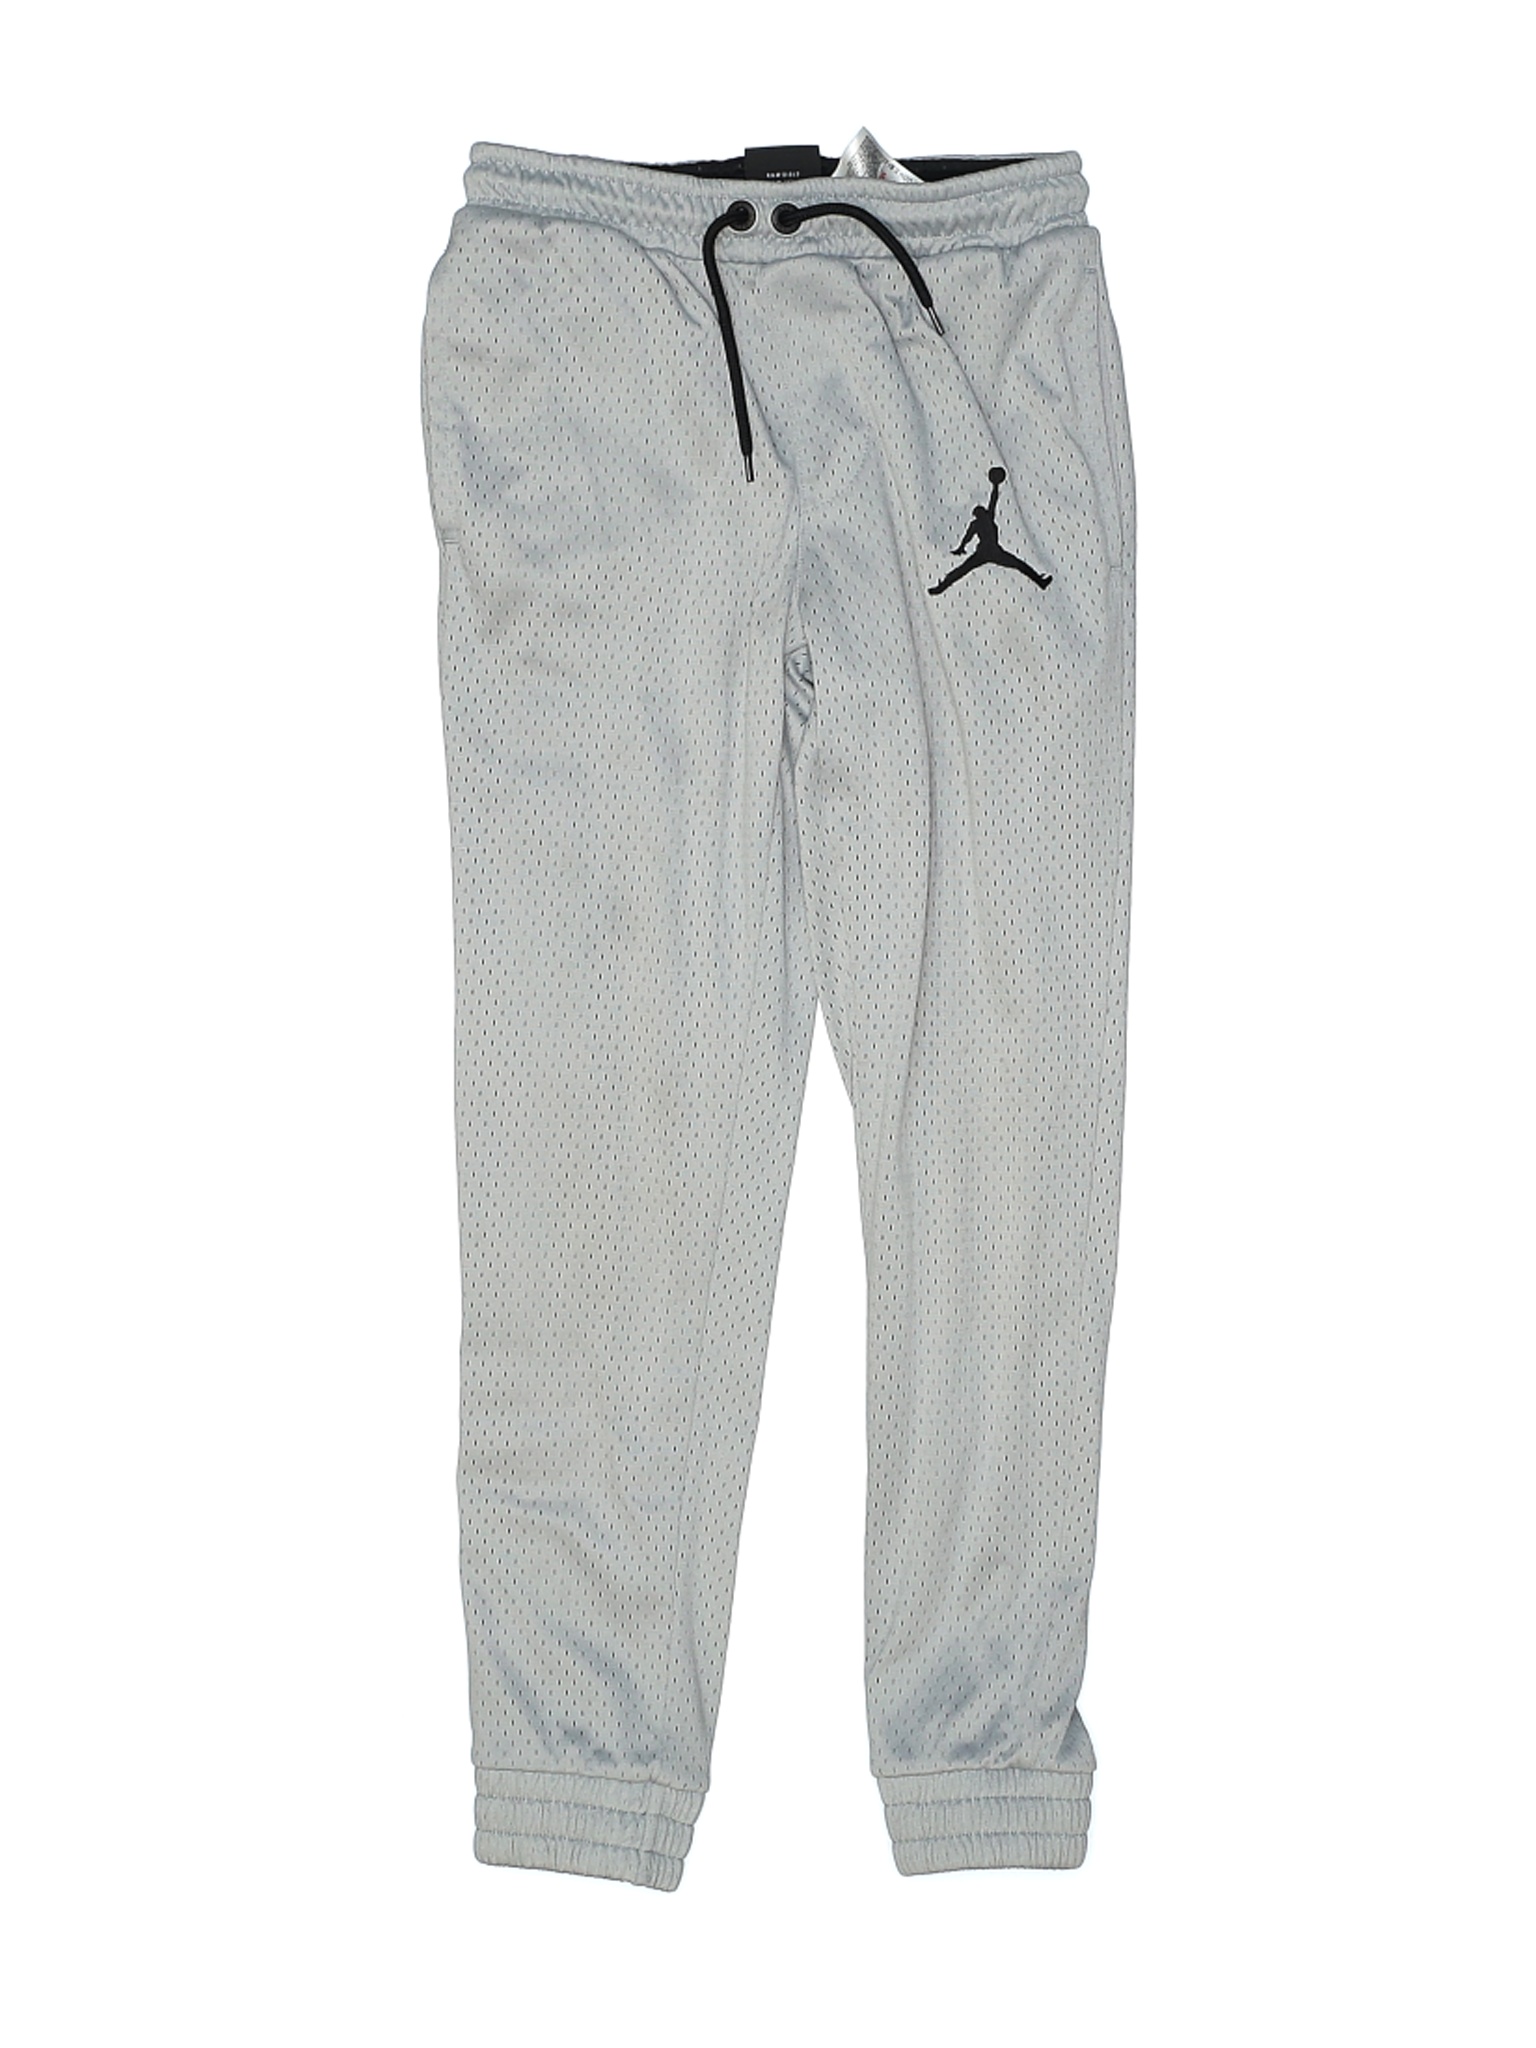 Jordan Boys Gray Active Pants S Youth | eBay